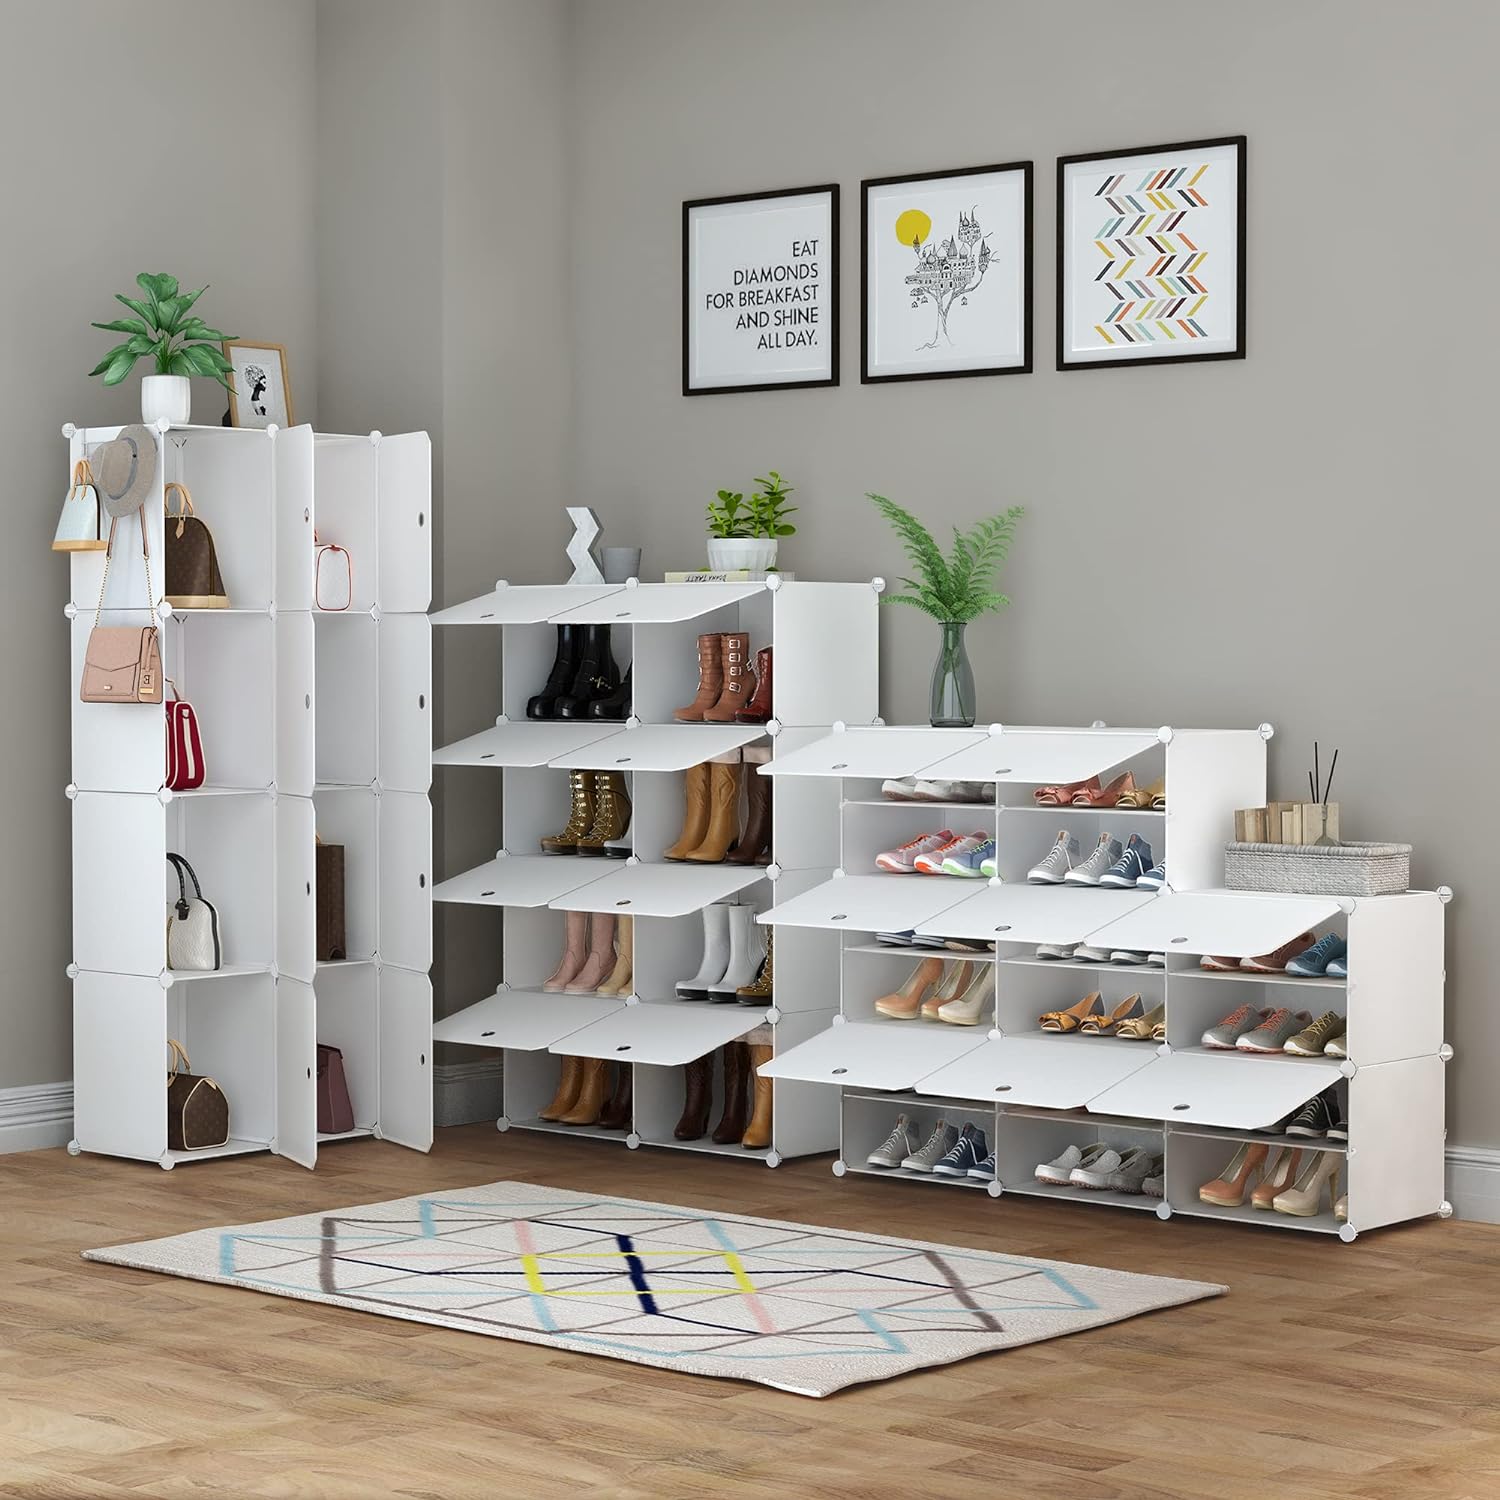 Storage Cabinet Plastic Shelves Organizer Shoe Cabinets for Closet